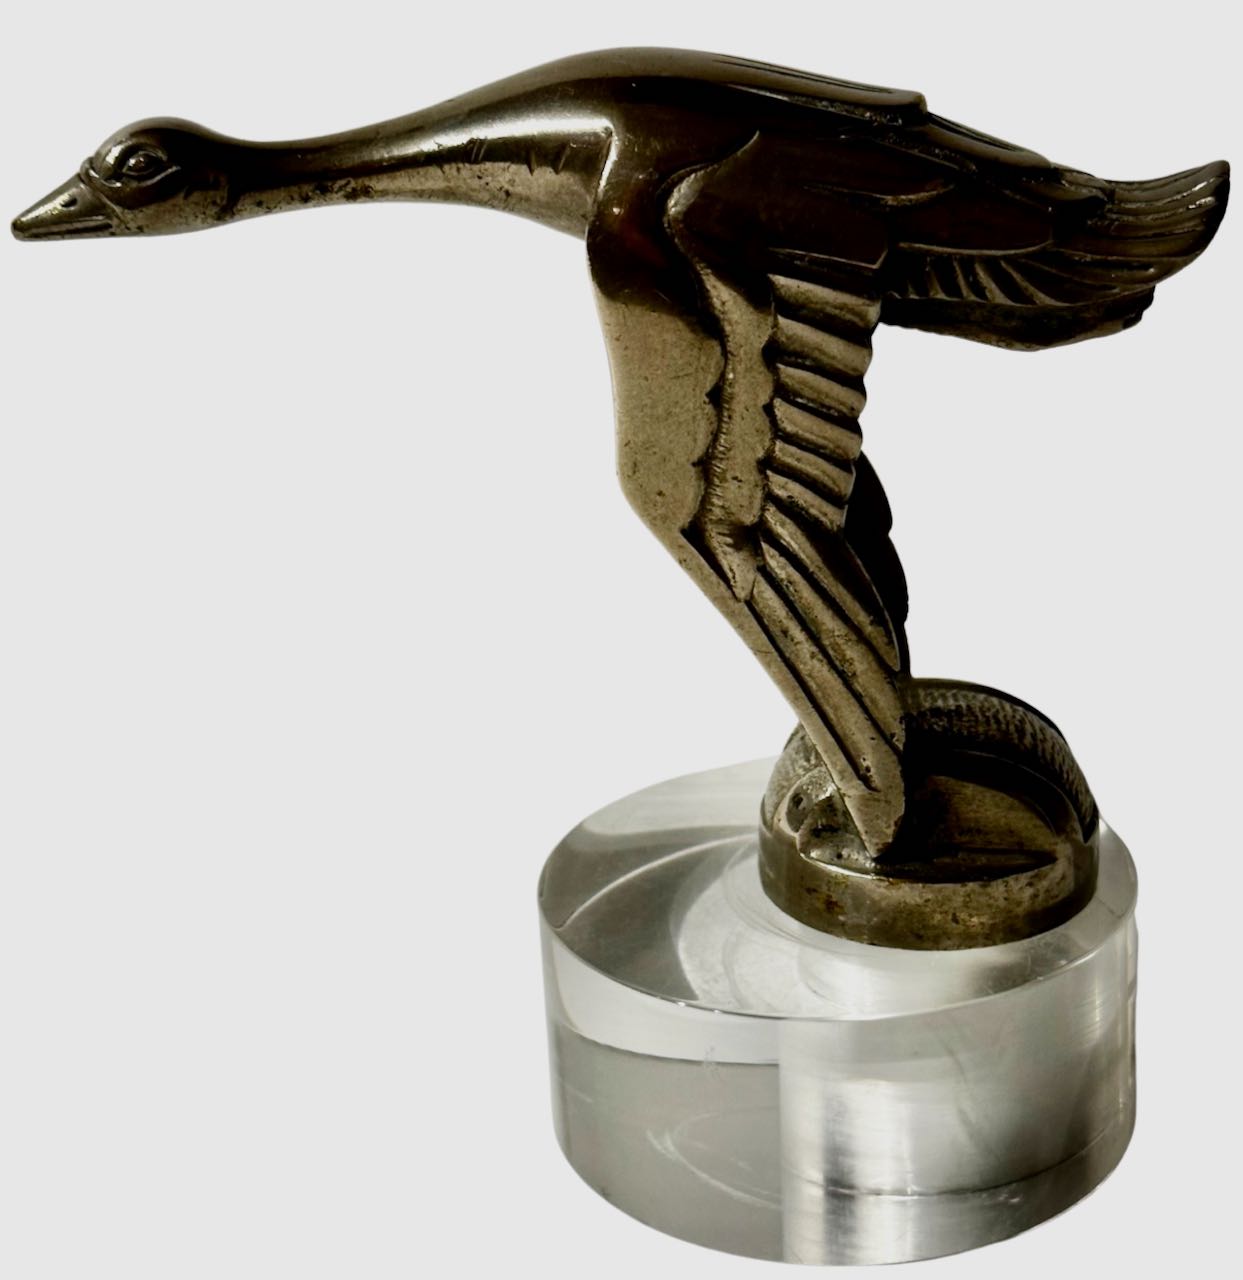 Goose Car Mascot Art Deco Styled After Hispano-Suiza 'Flying Stork' Mascot 